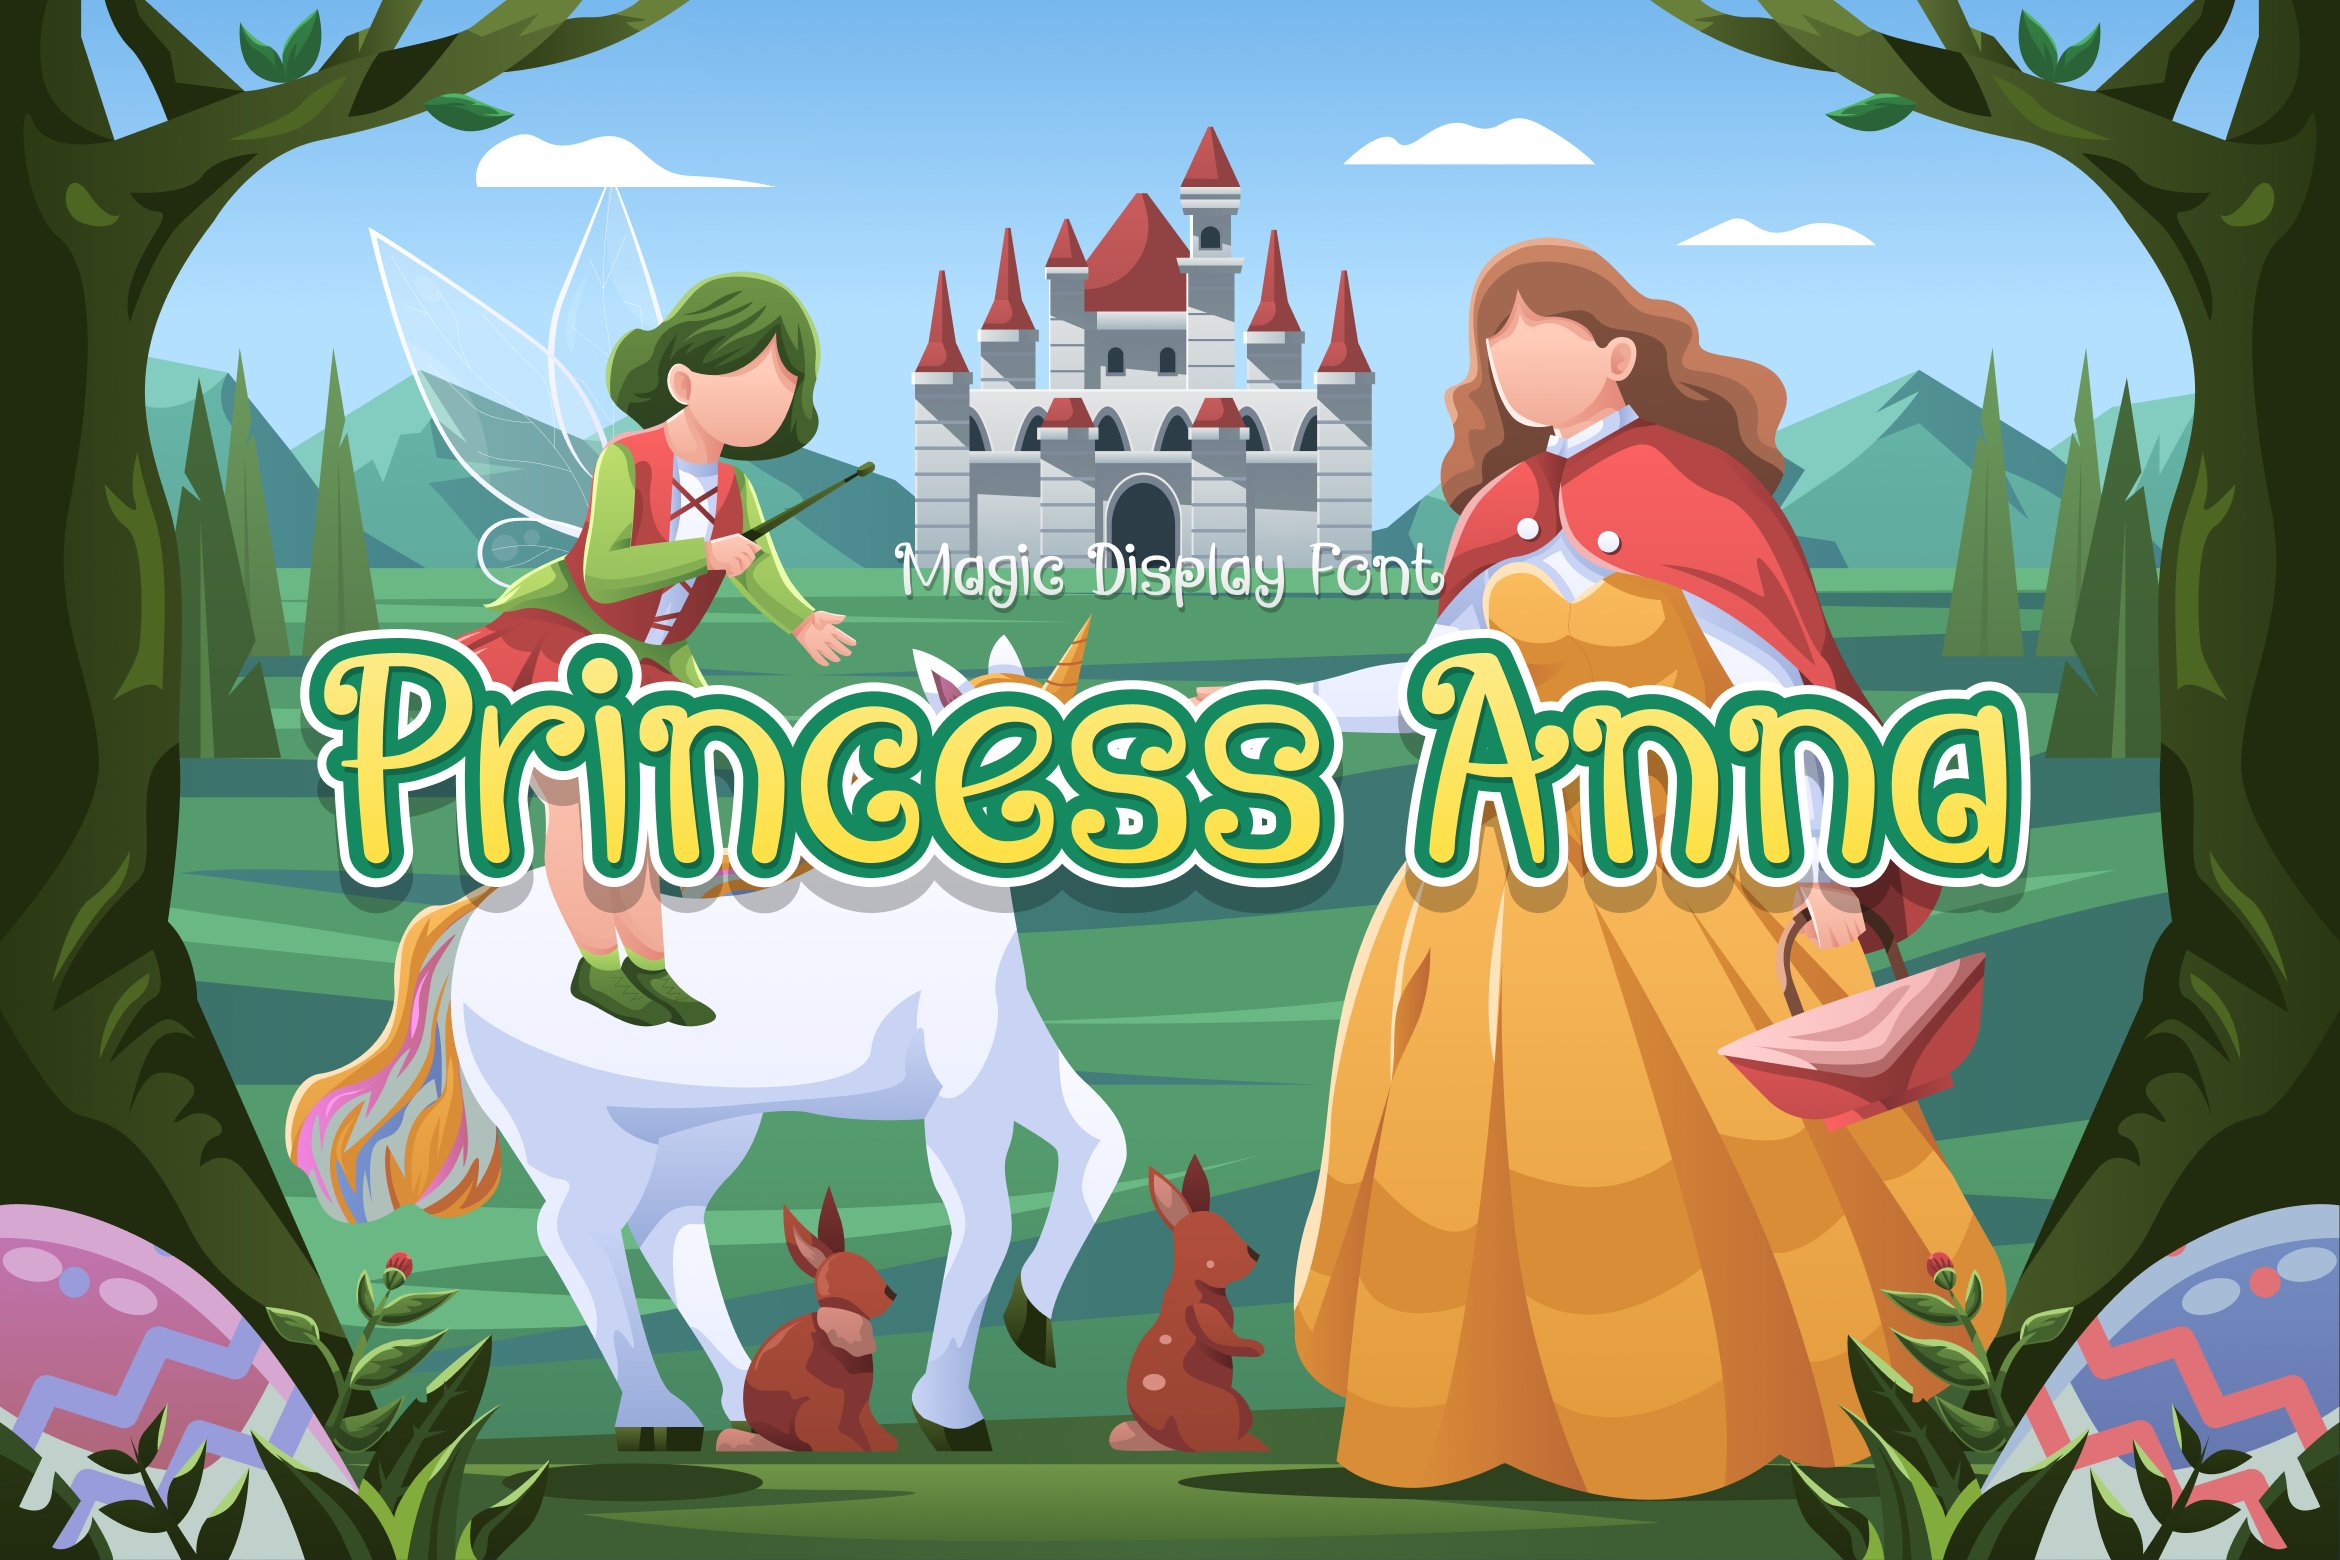 Princess Anna – Magic Display Font cover image.